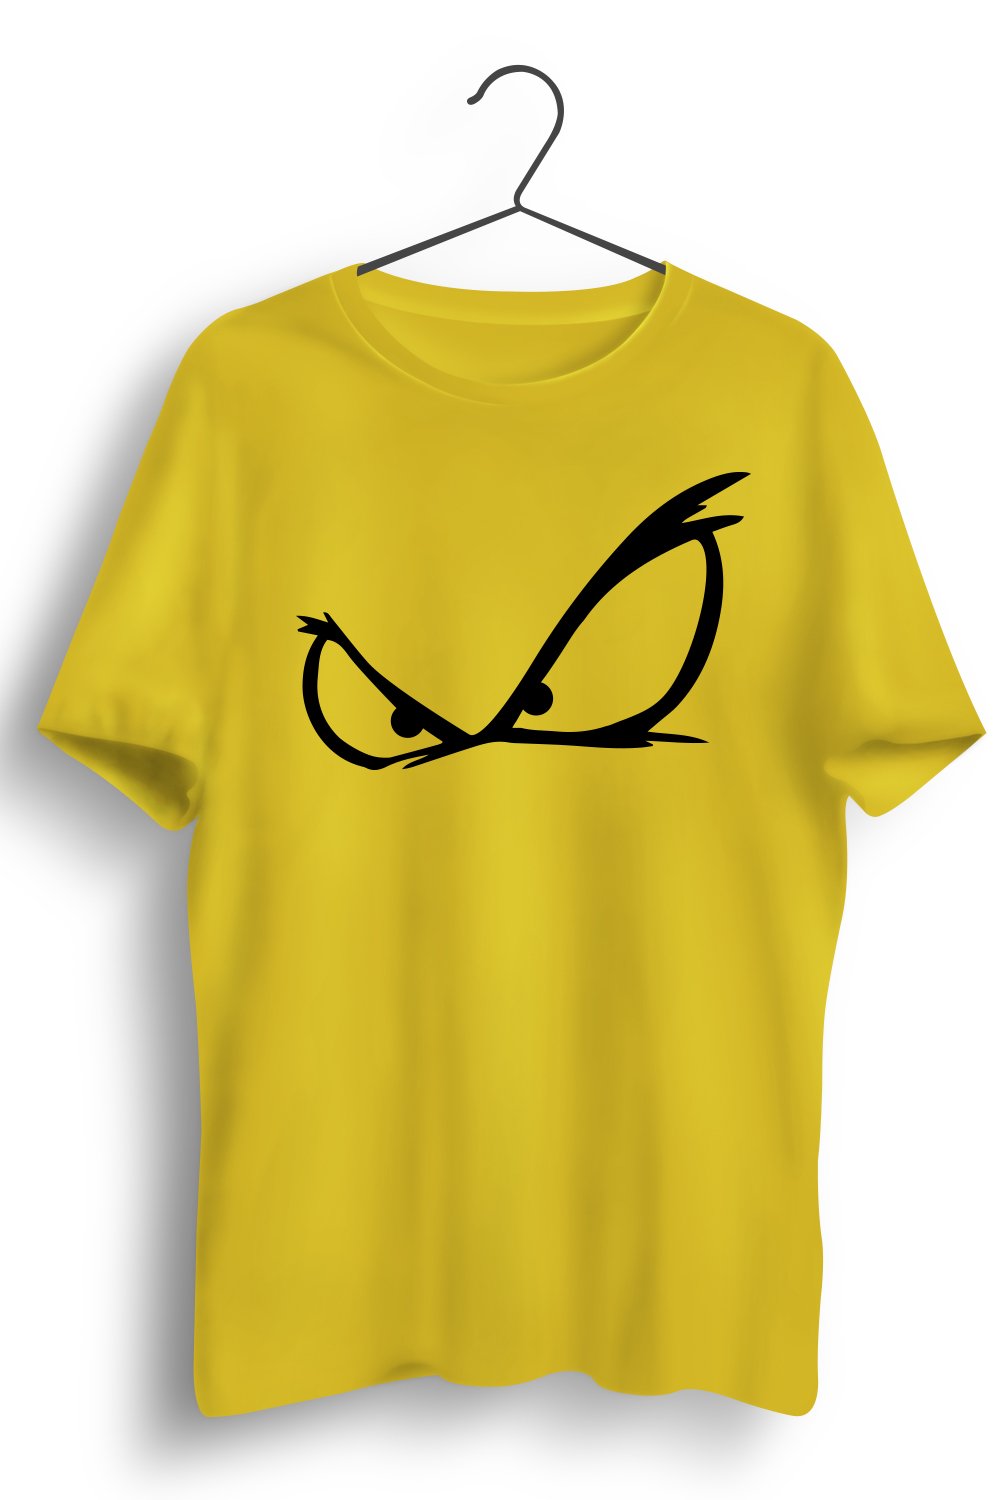 Angry Eyes Graphic Printed Yellow Tshirt